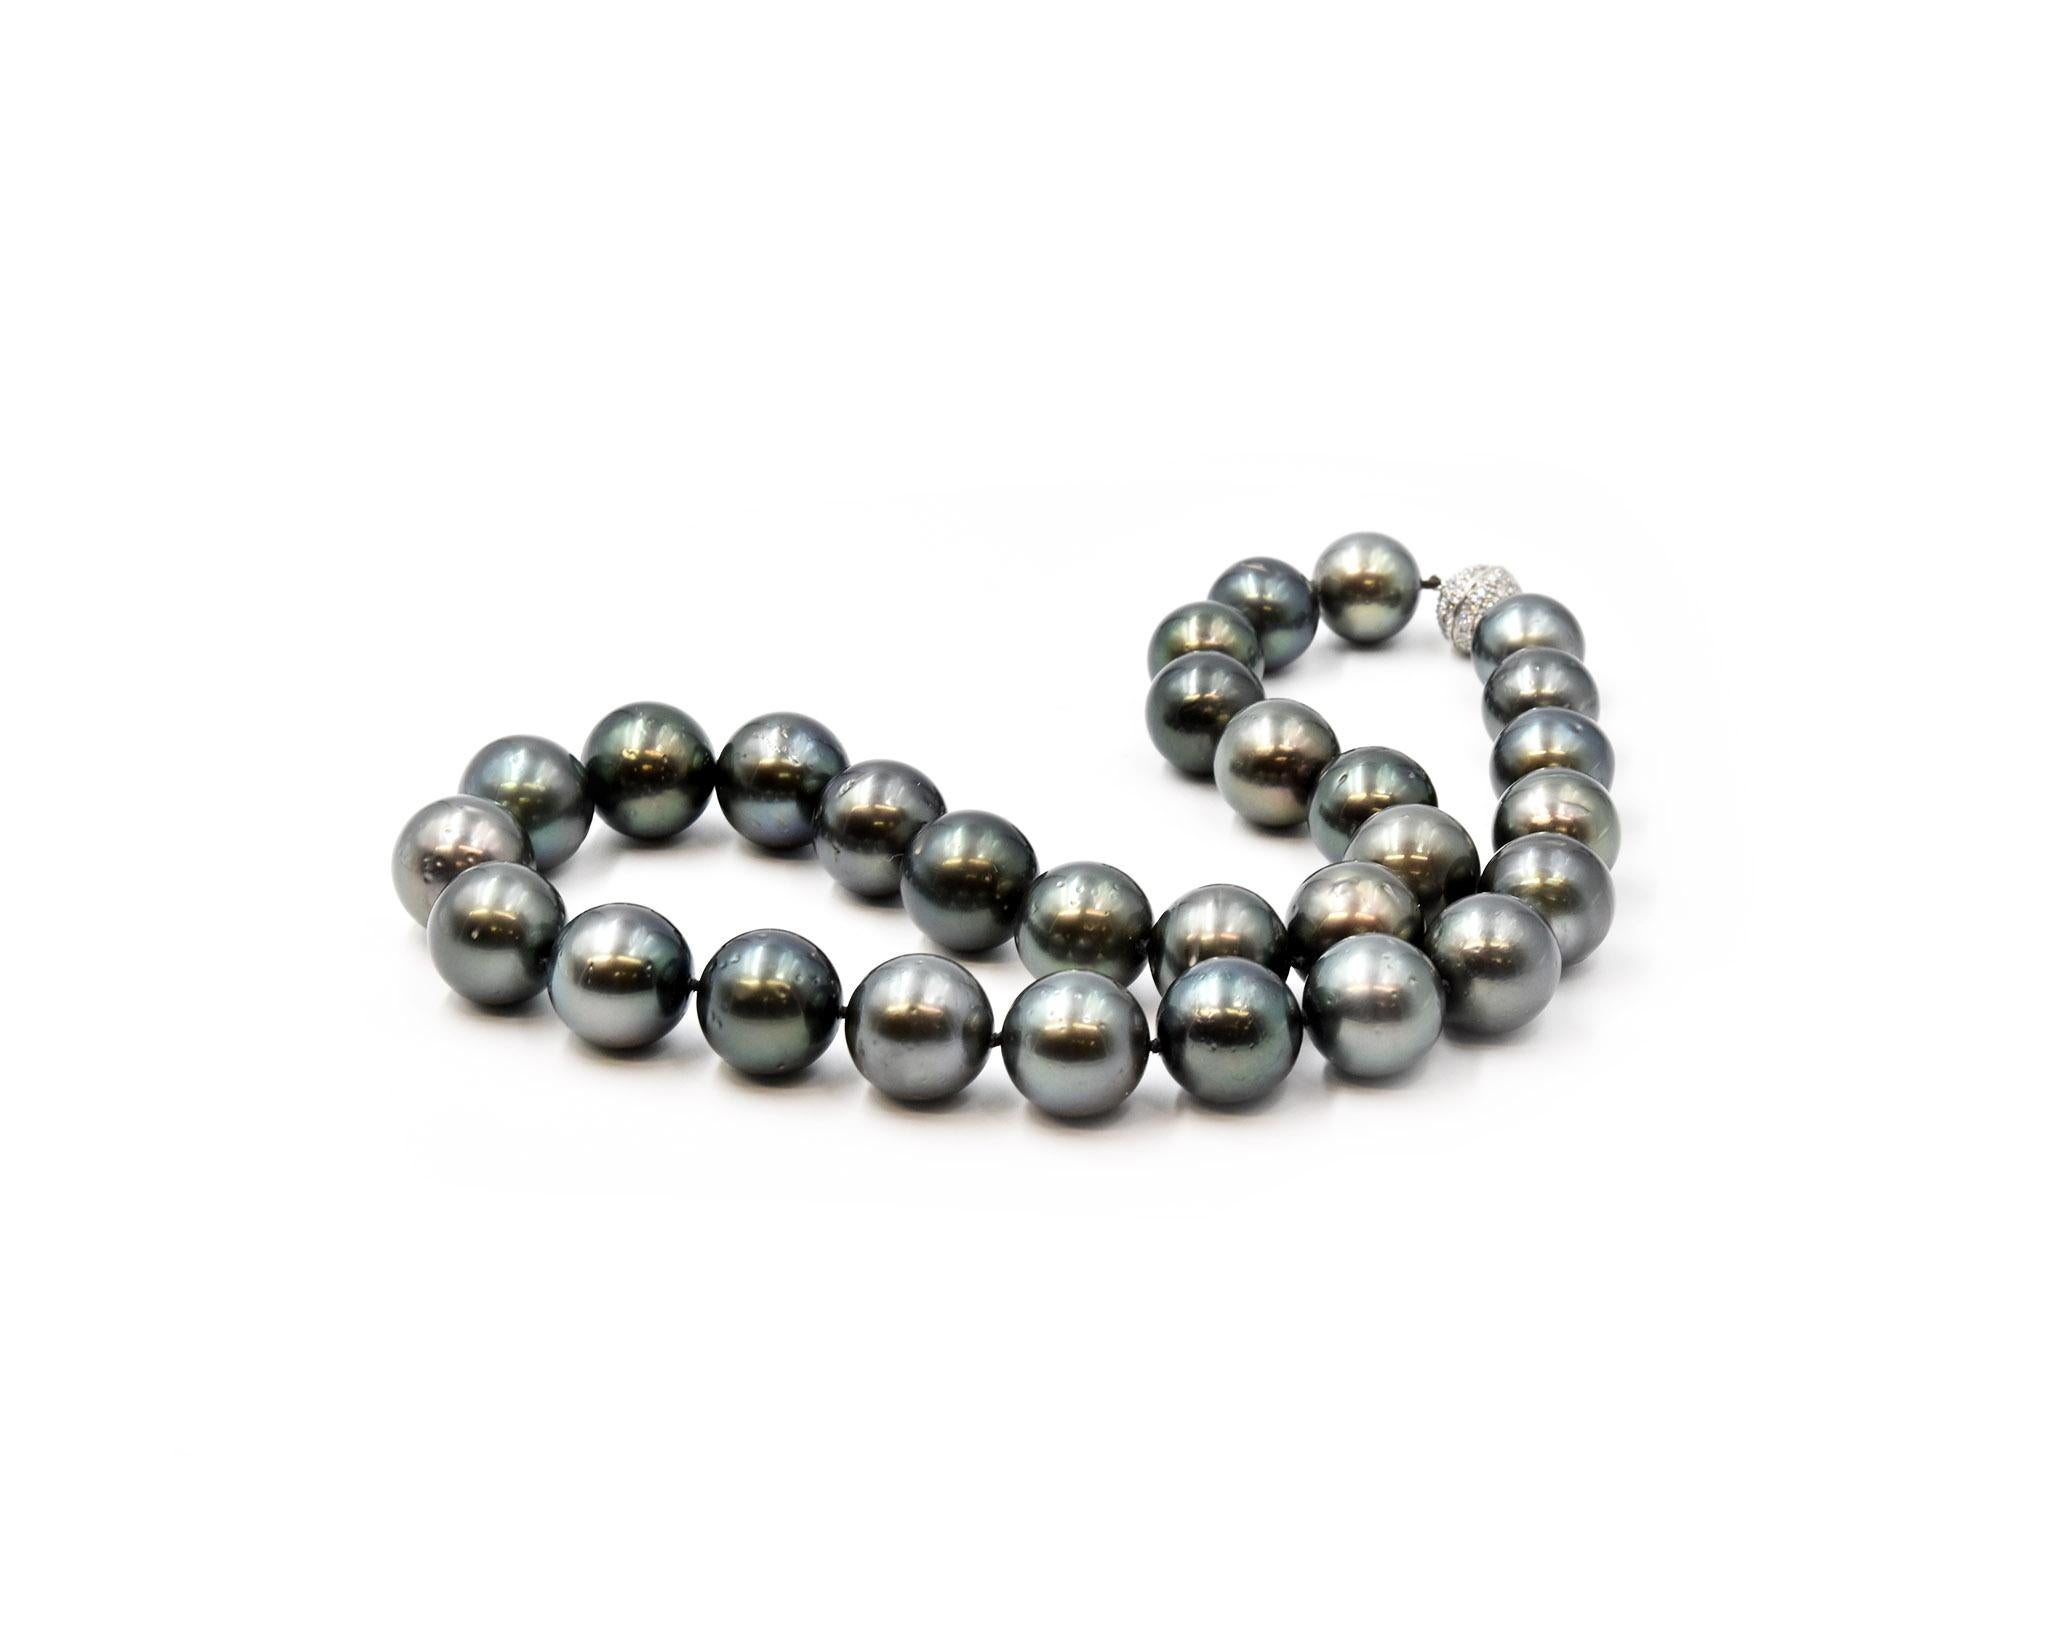 Designer: Sophia D
Material: Platinum
Tahitian Pearl: 12-14mm round Tahitian pearls
Diamonds: 72 diamonds = 1.08cttw
Dimensions: necklace is 18-inch long
Weight: 120.43 grams
